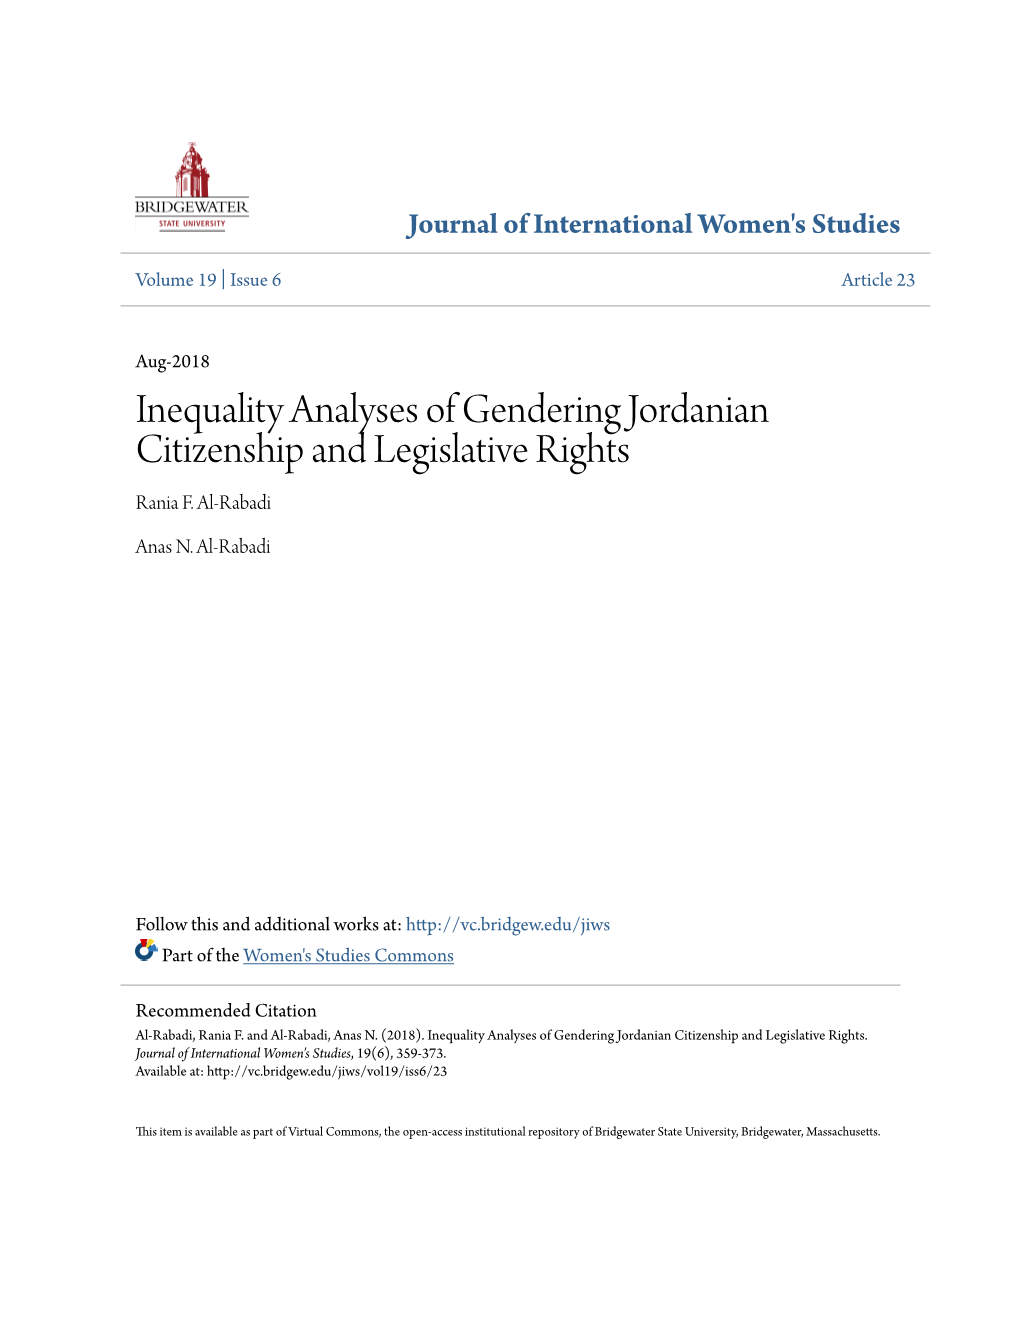 Inequality Analyses of Gendering Jordanian Citizenship and Legislative Rights Rania F